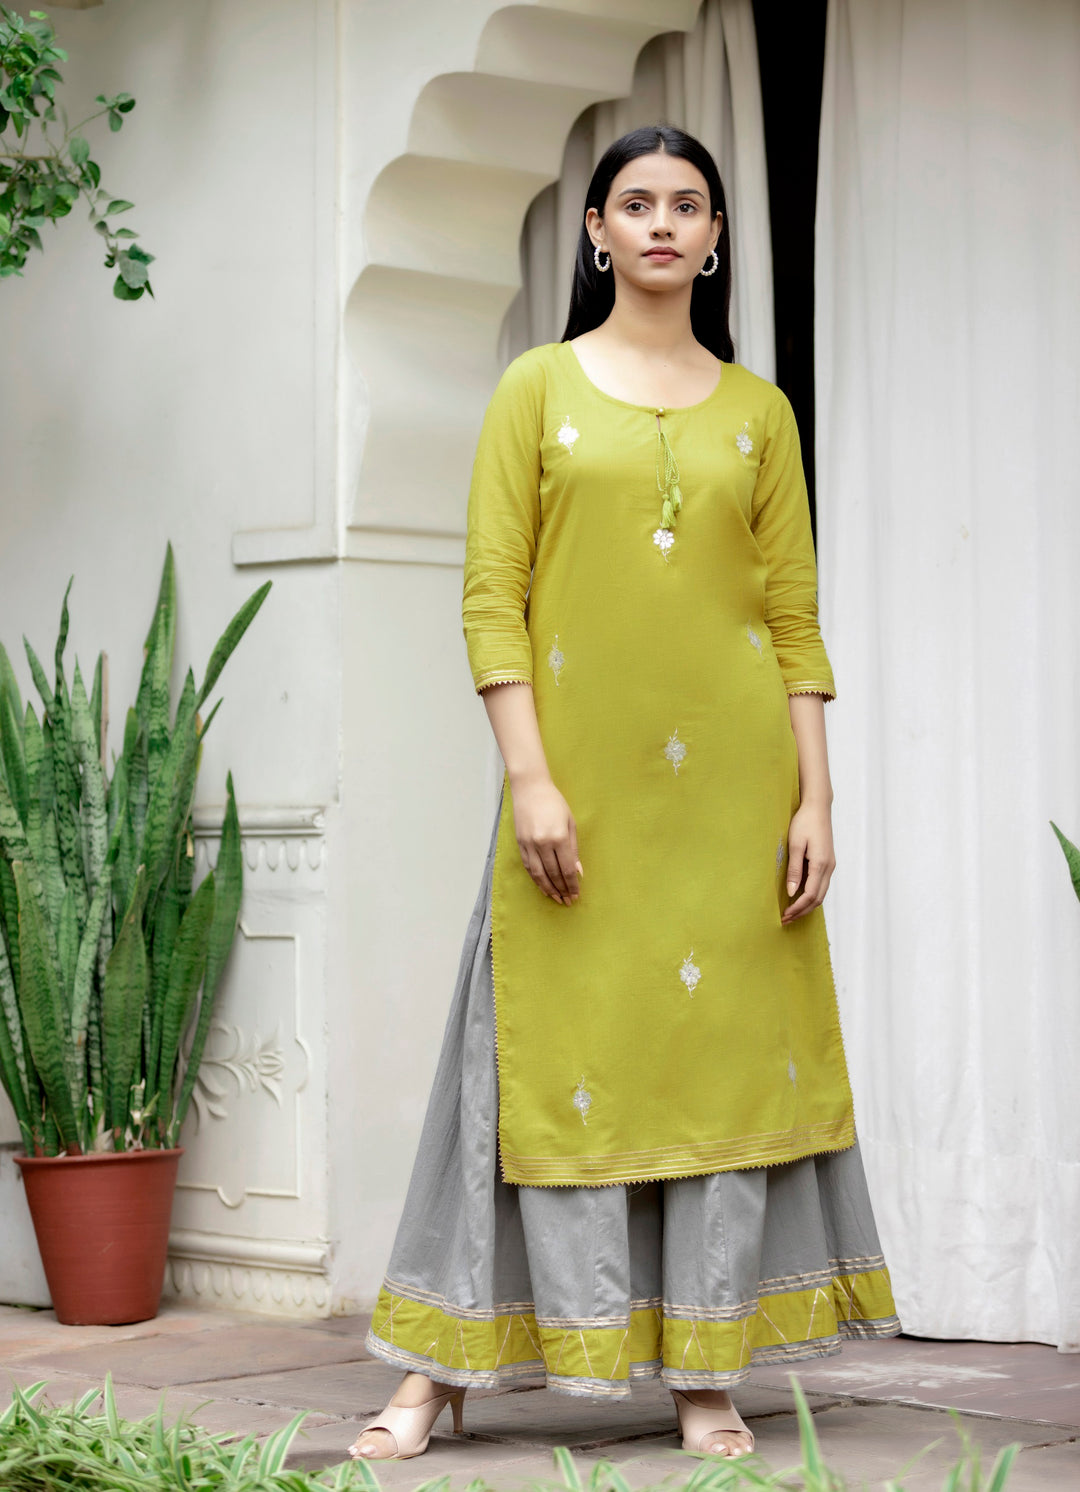 Shop For Green Sharara dress For wedding